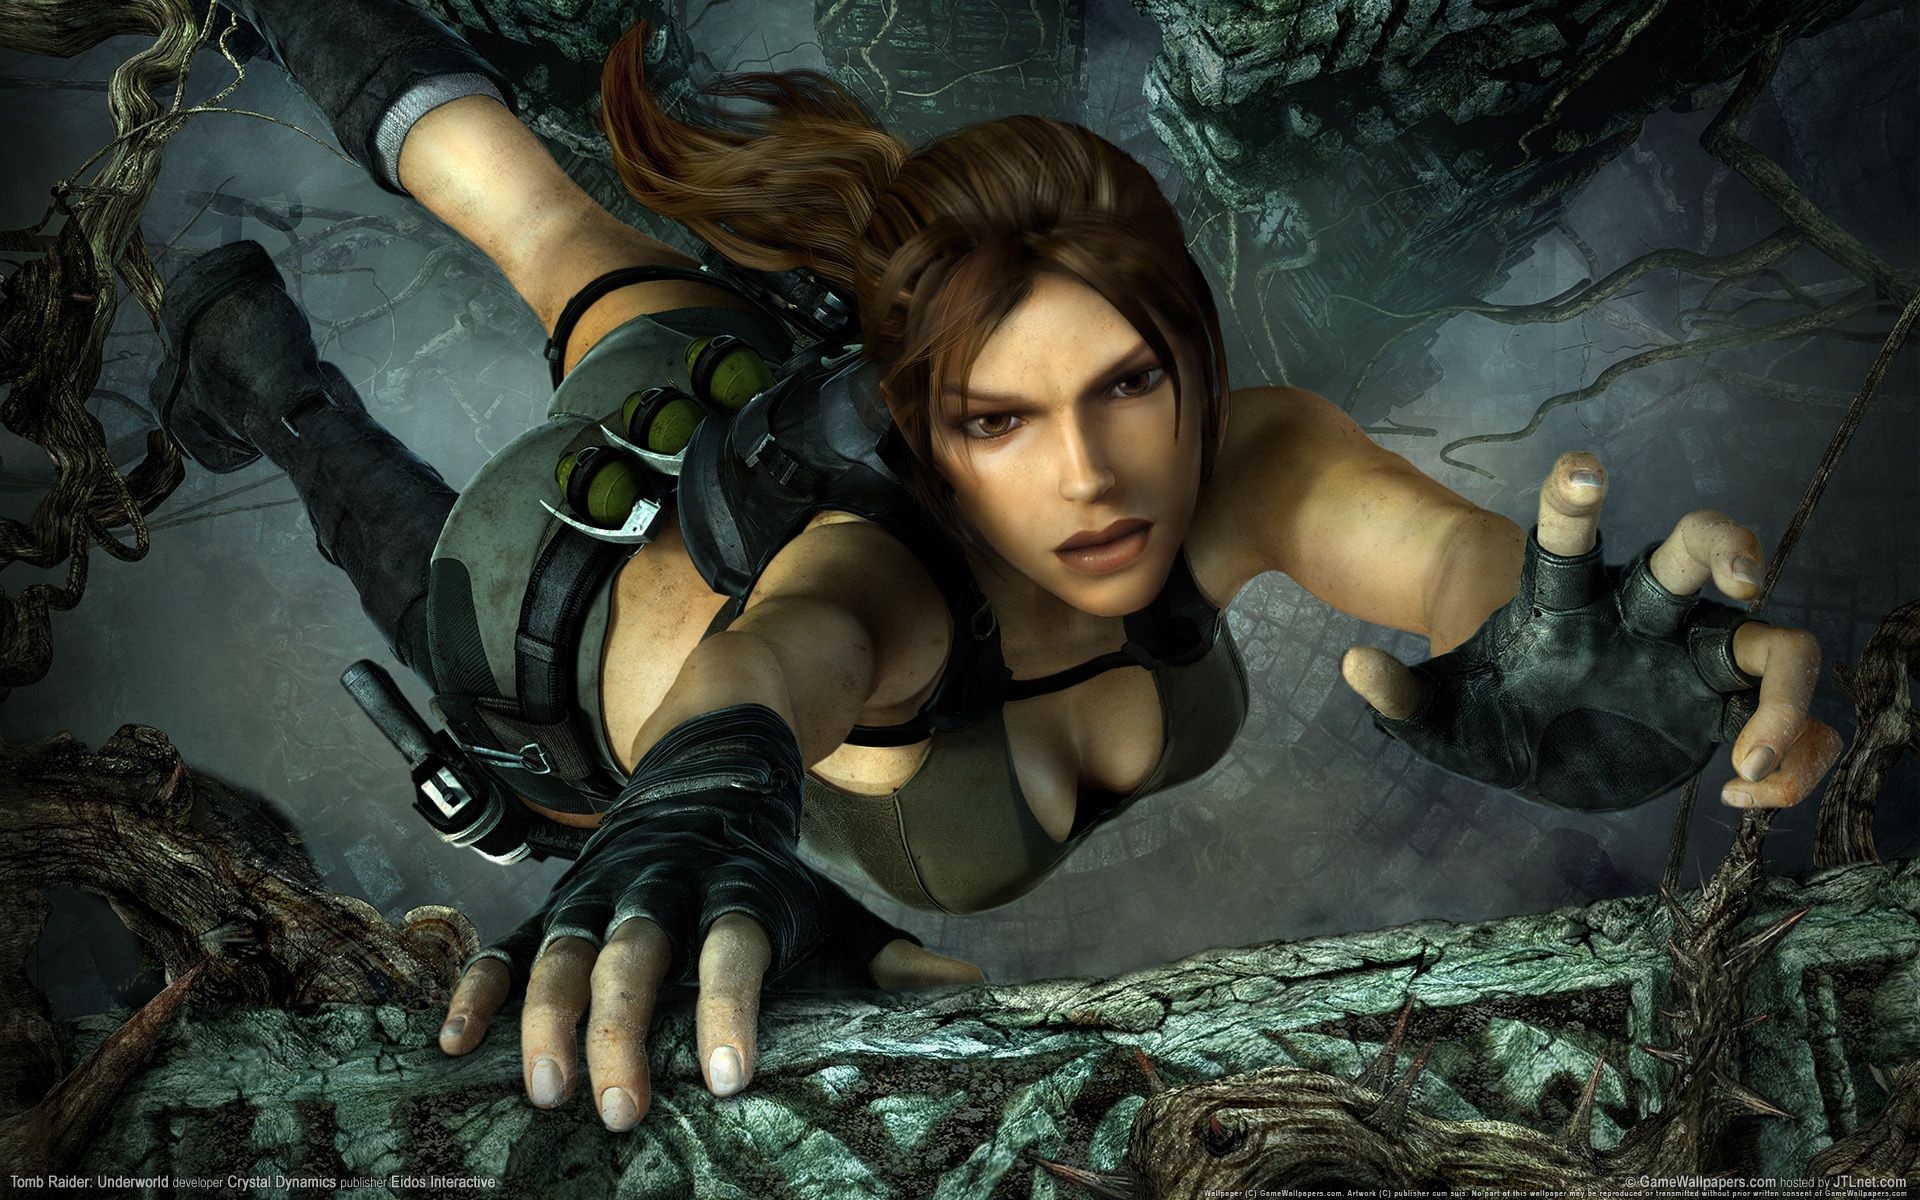 Tomb Raider: Underworld, Iconic Lara Croft, Exciting game wallpaper, Stunning imagery, 1920x1200 HD Desktop